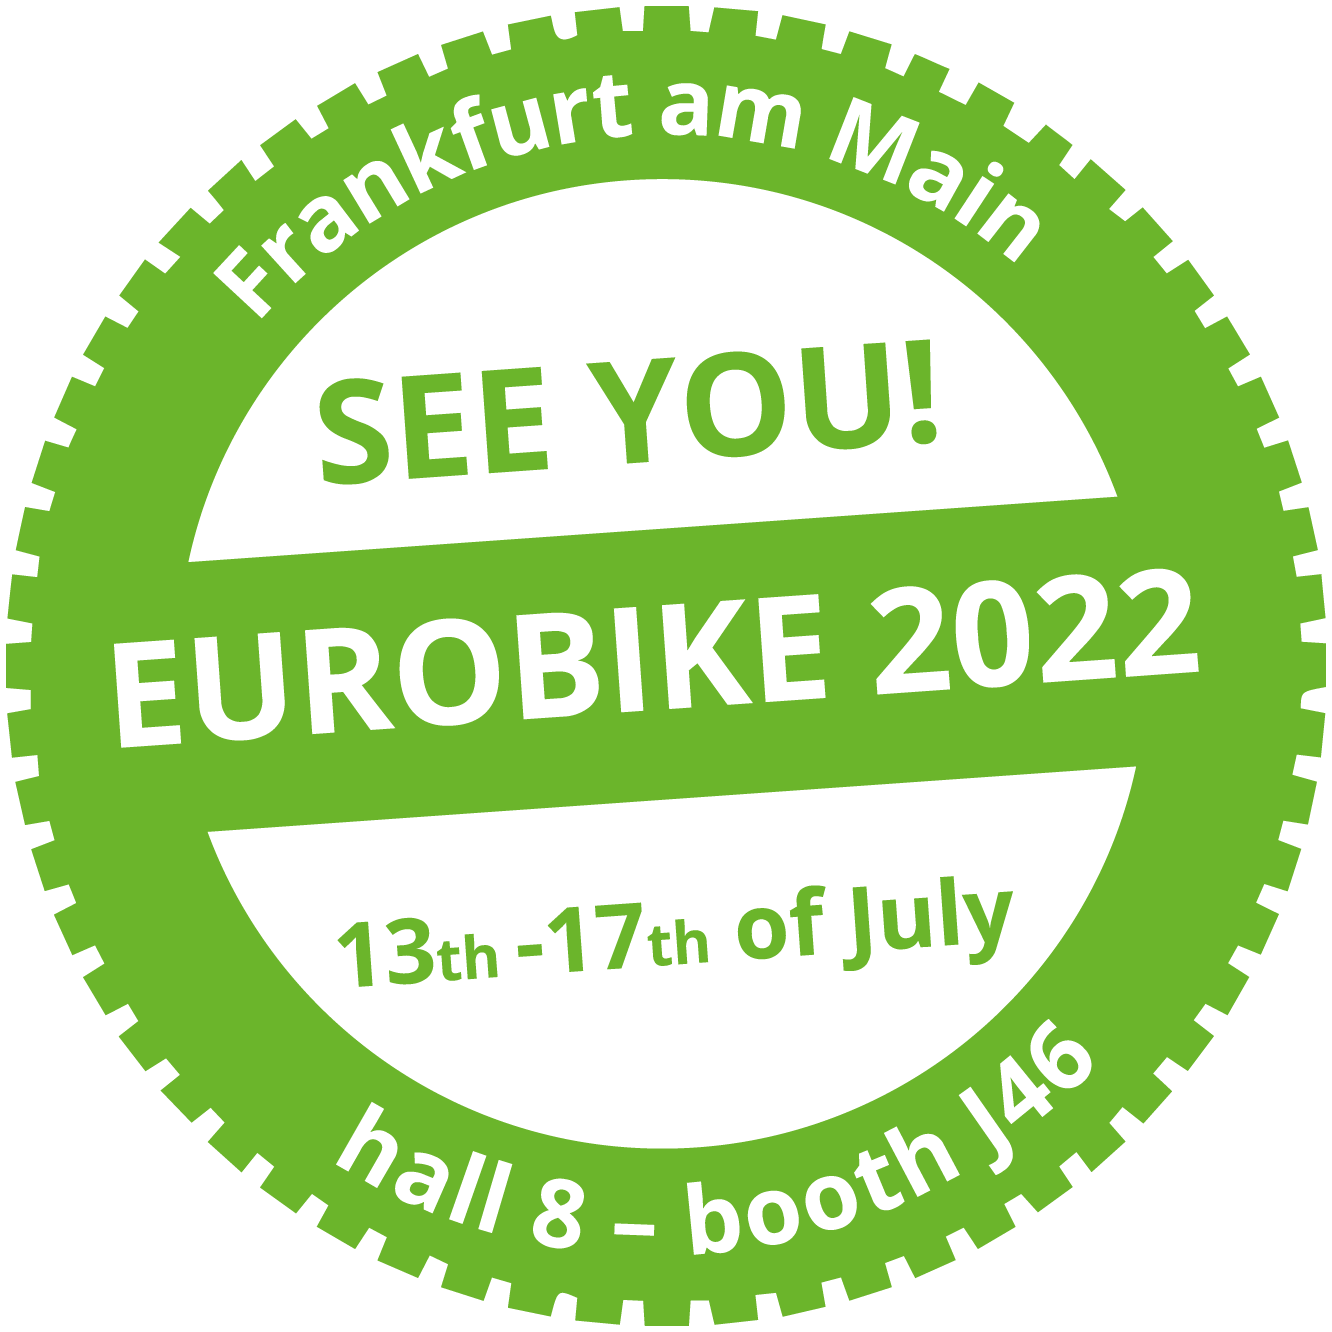 Meet us at Eurobike